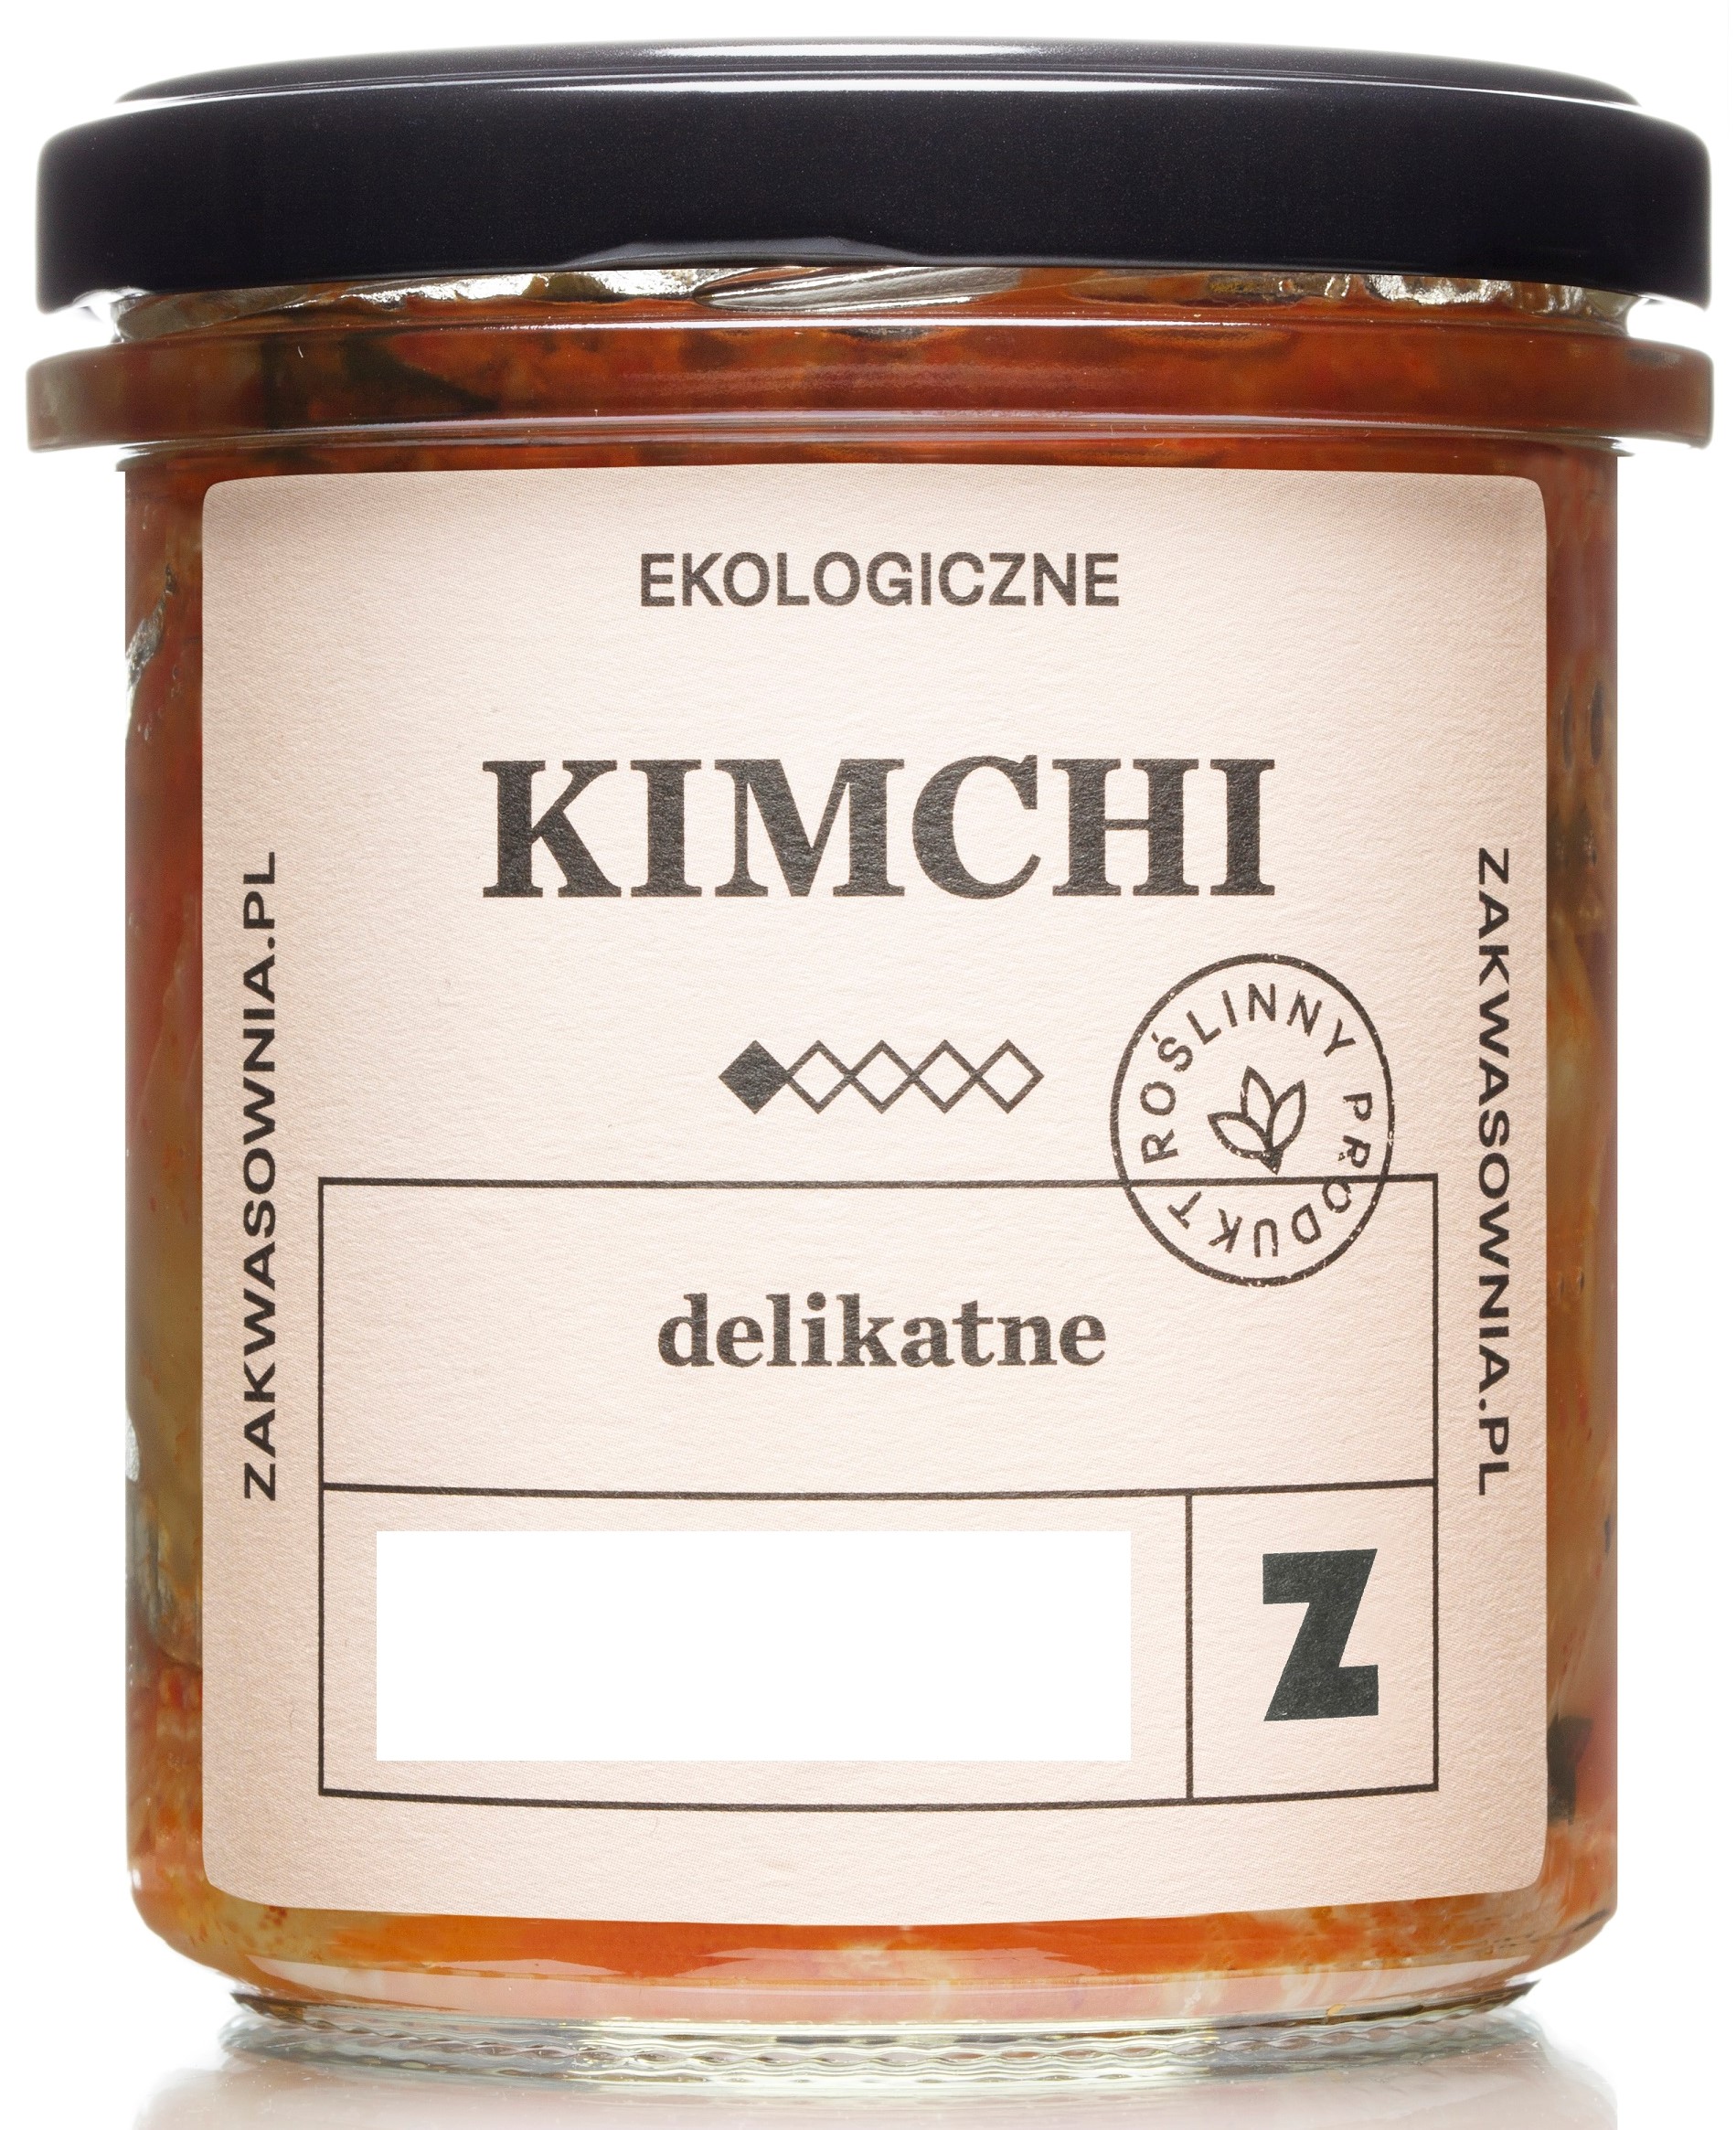 Zakwasownia Kimchi delikatne ekologiczne